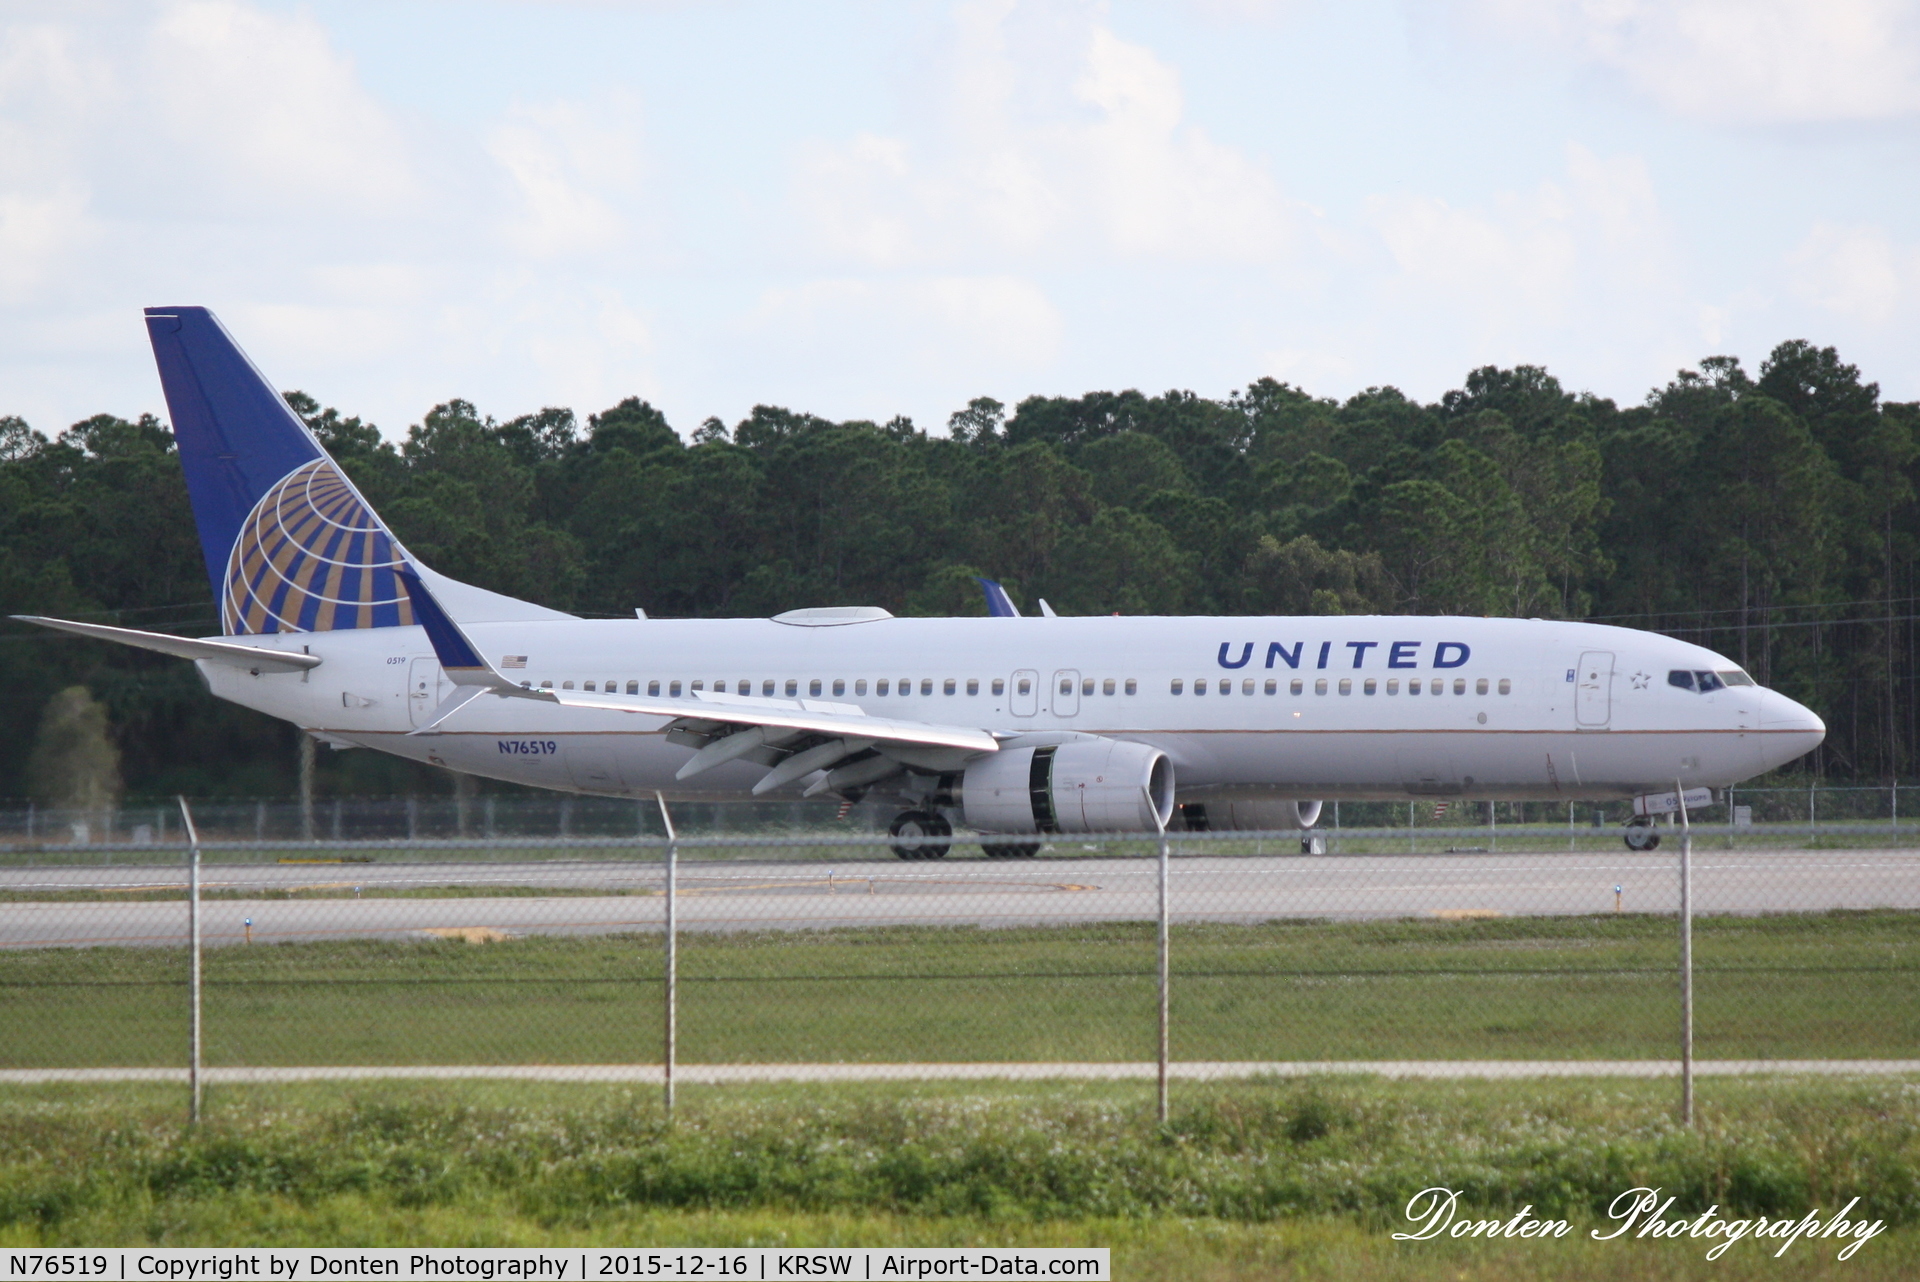 N76519, 2009 Boeing 737-824 C/N 30132, United Flight 174 (N76519) arrives at Southwest Florida International Airport following flight from Newark-Liberty International Airport